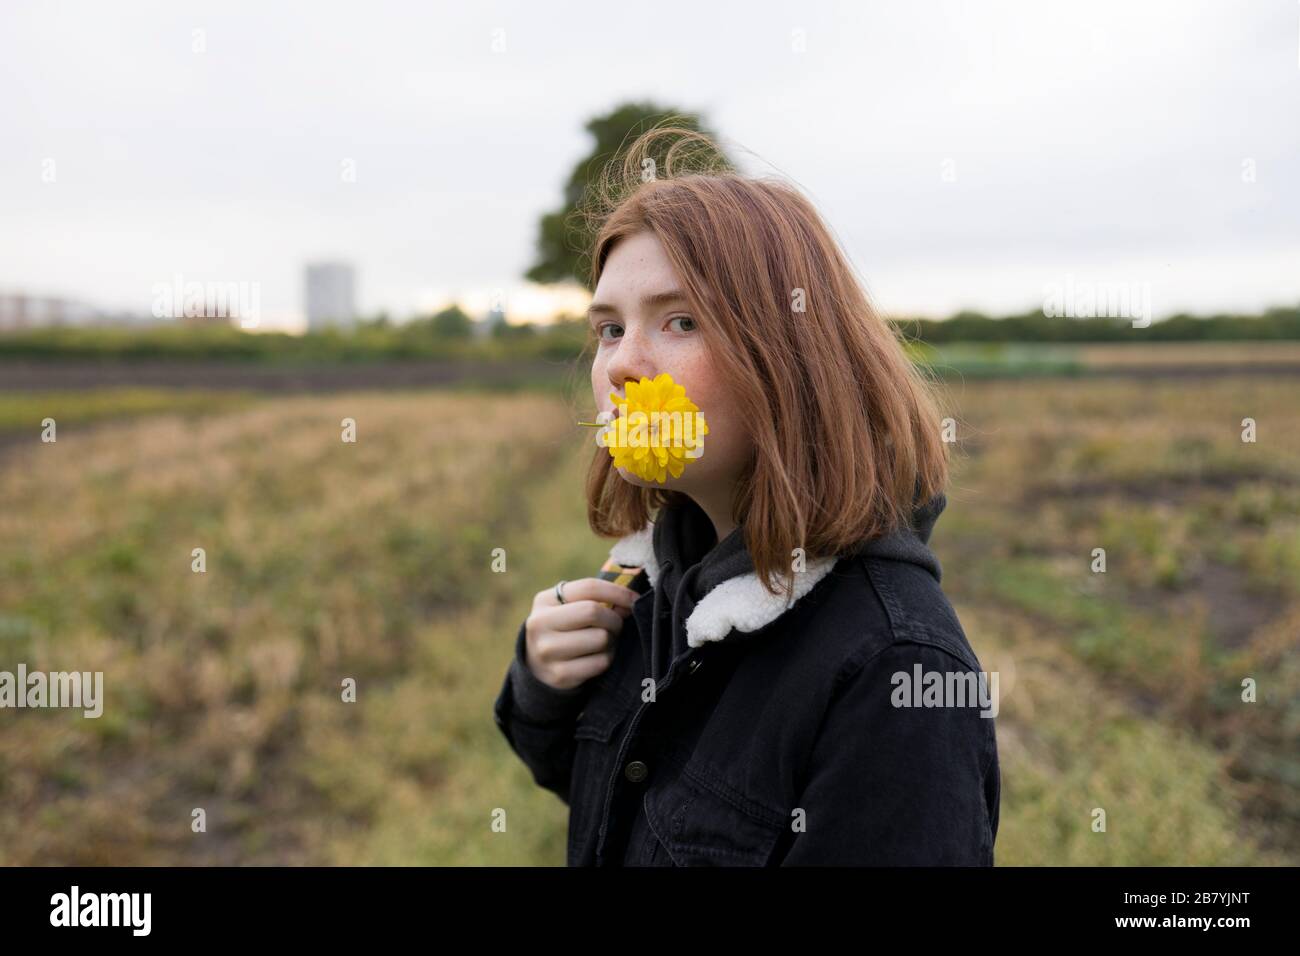 Teenage girl holding yellow flower in field Stock Photo